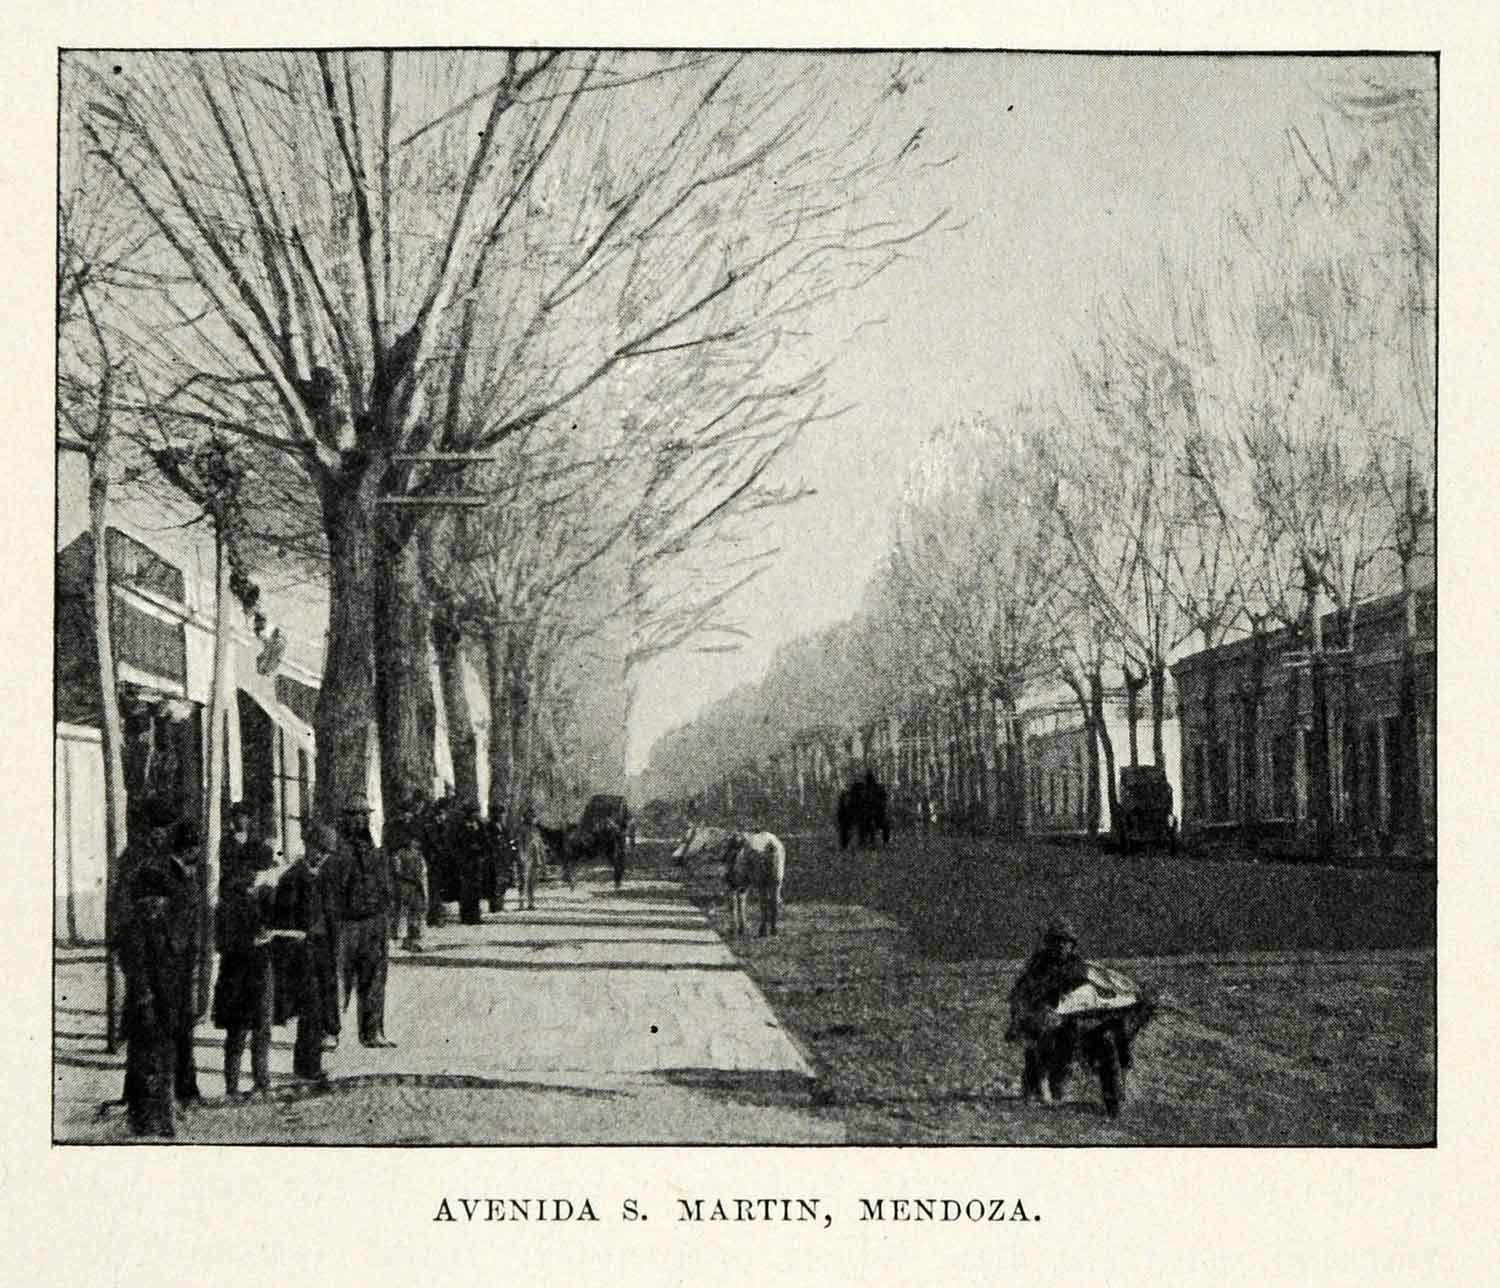 1901 Halftone Print Mendoza City Argentina Avenida S. Martin Street People XGO8